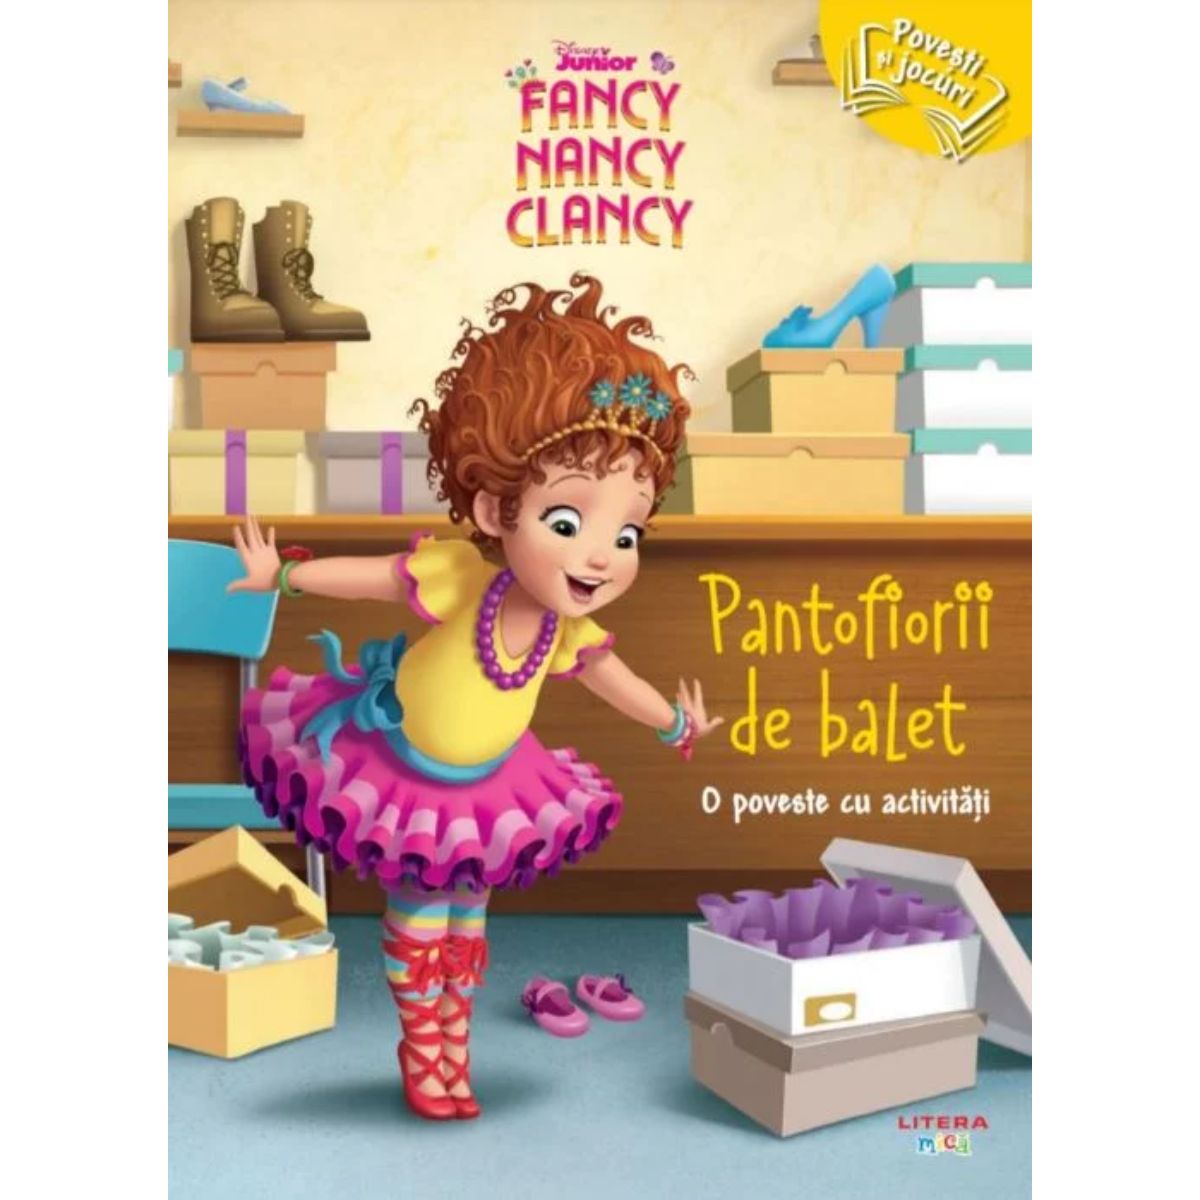 Disney Junior Fancy Nancy Clancy, Pantofiorii de balet balet imagine 2022 protejamcopilaria.ro